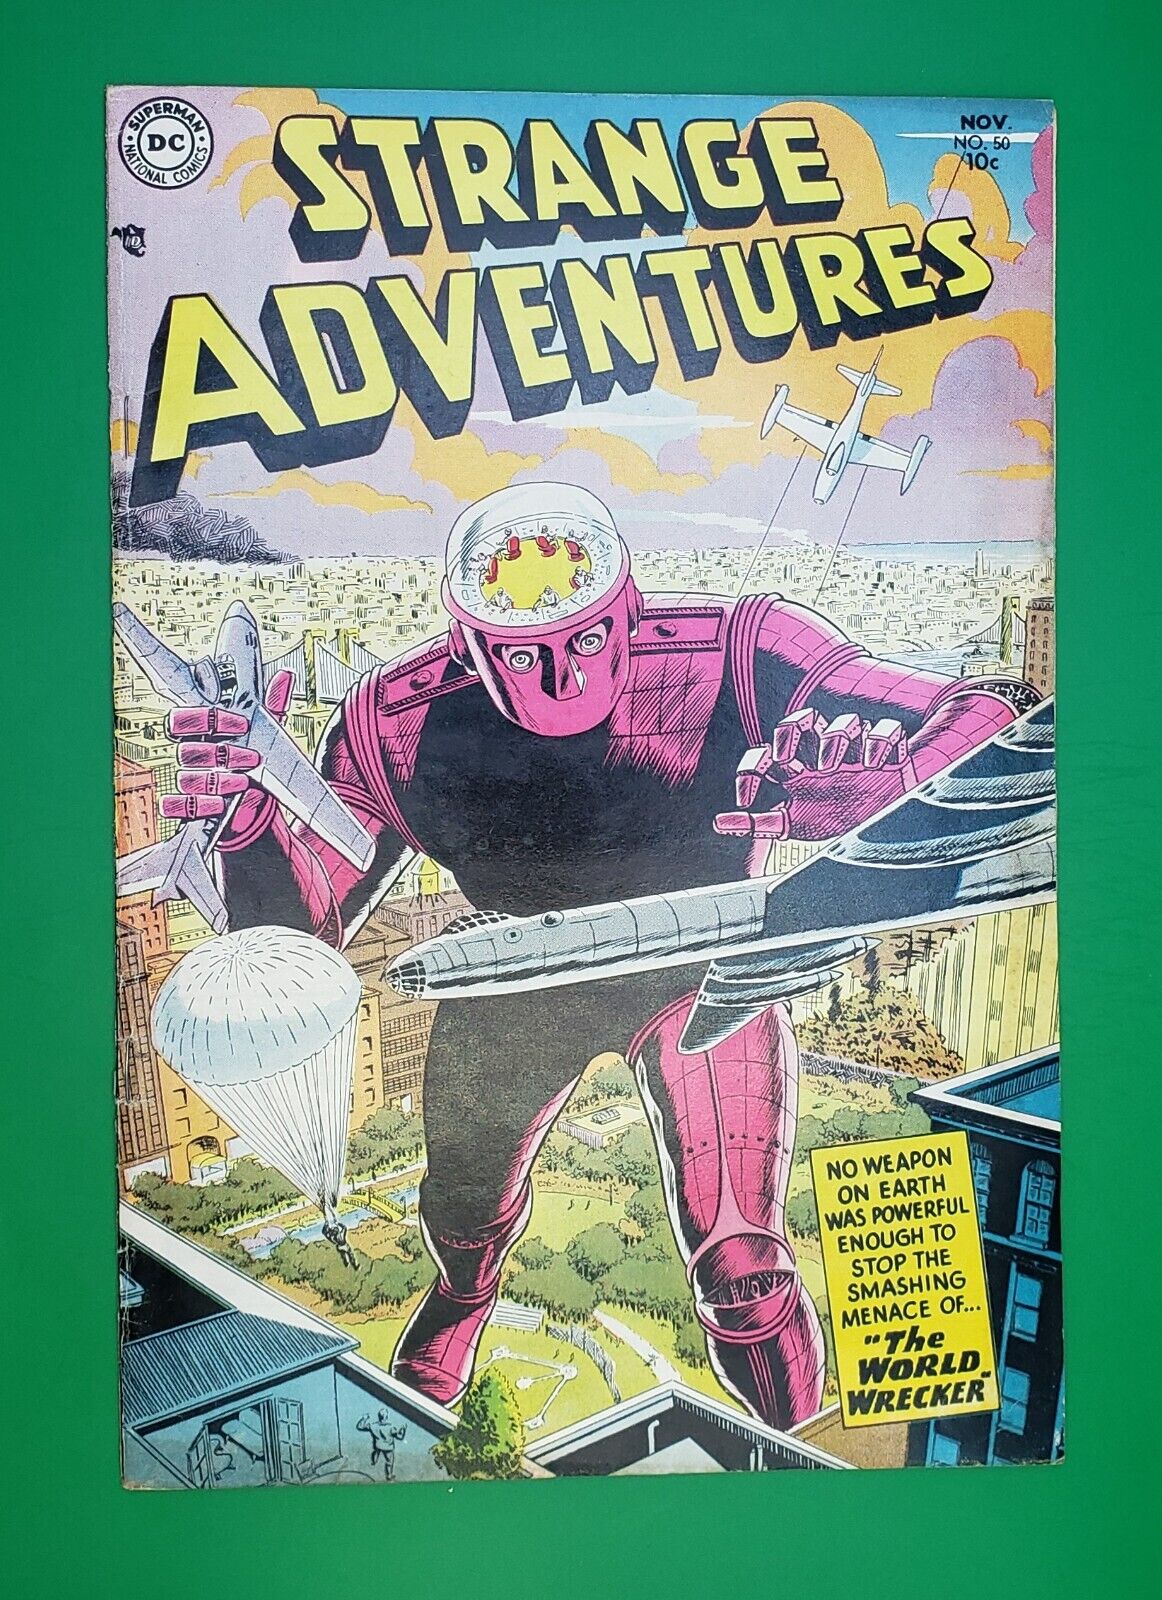 Strange Adventures #50 DC Comics 1954 Golden Age Classic Robot Cover VG+/FN-